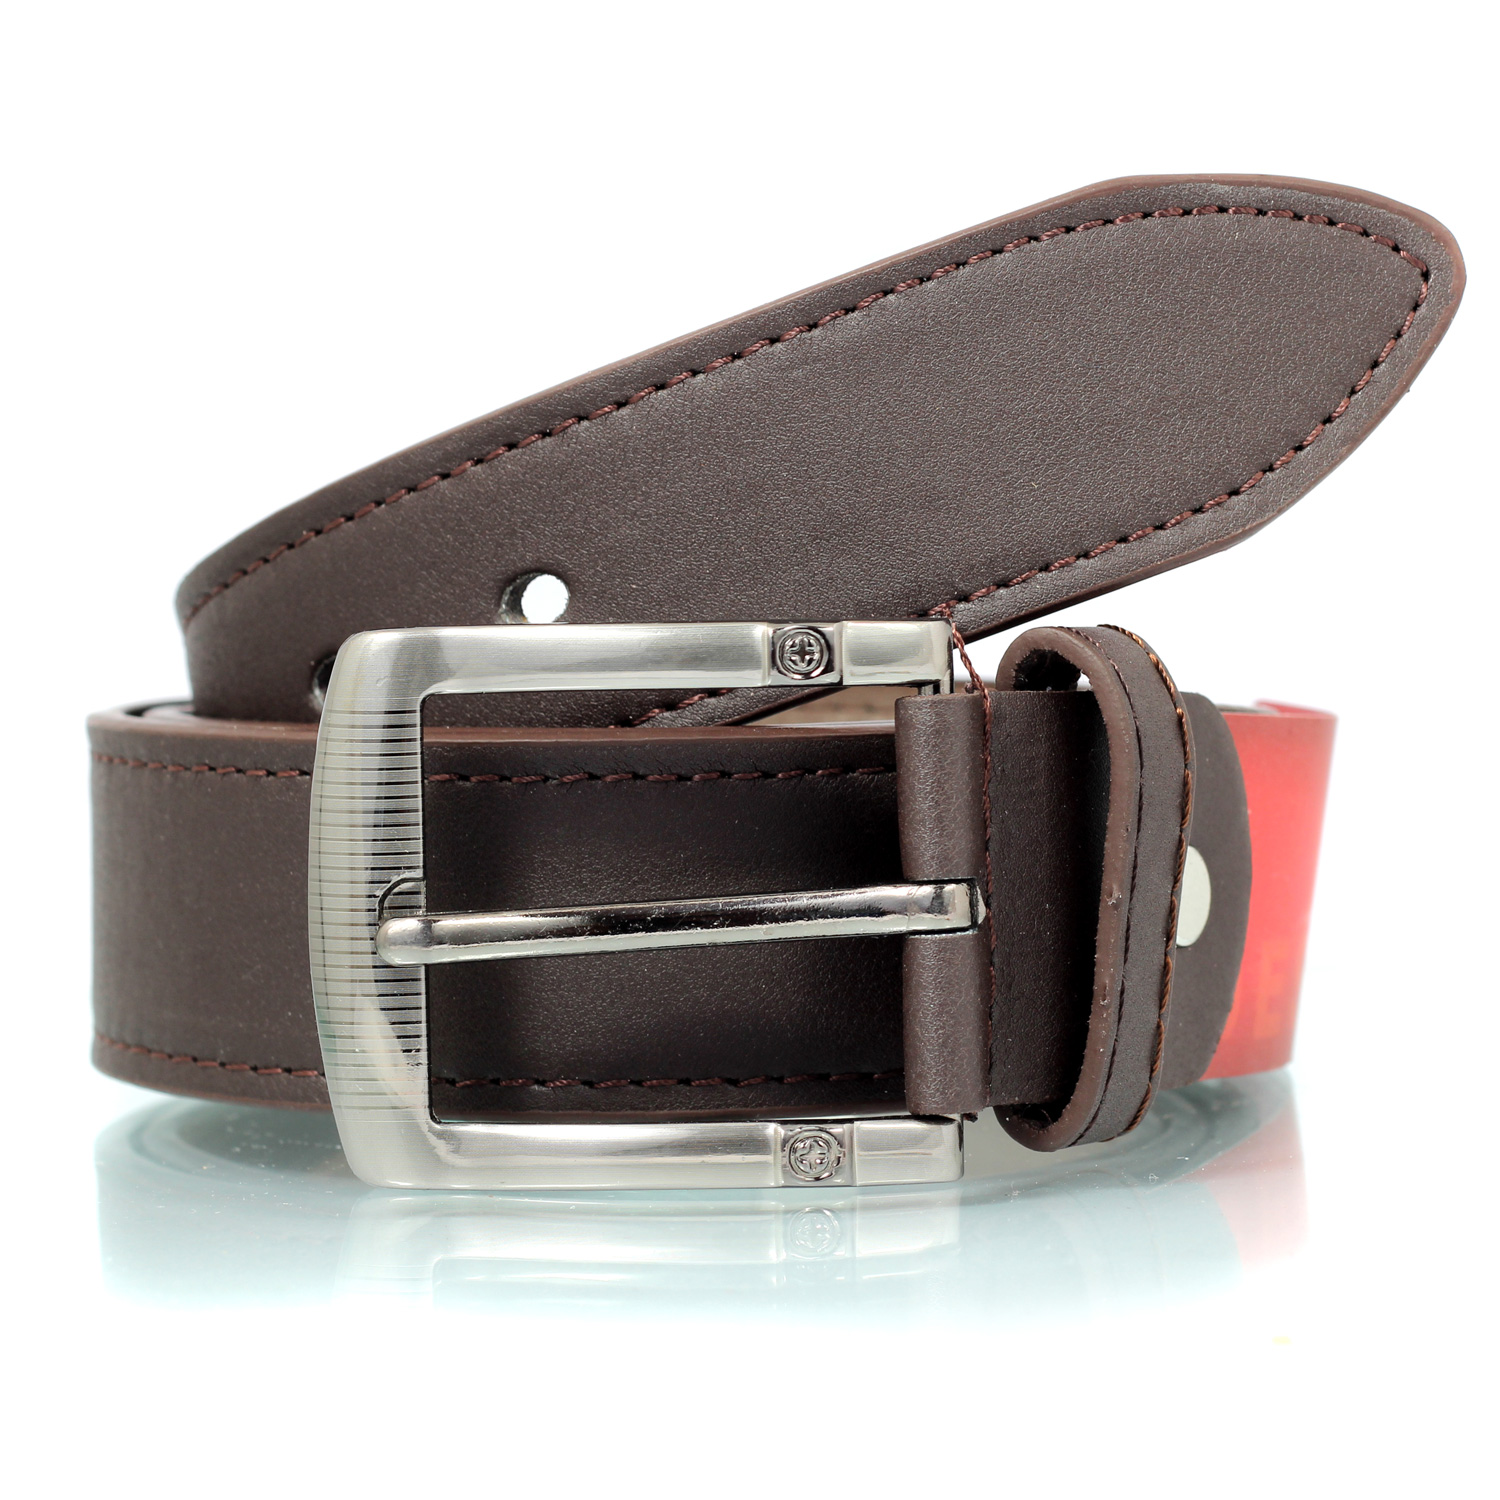 SPAIROW pin buckle brown desire leather belt